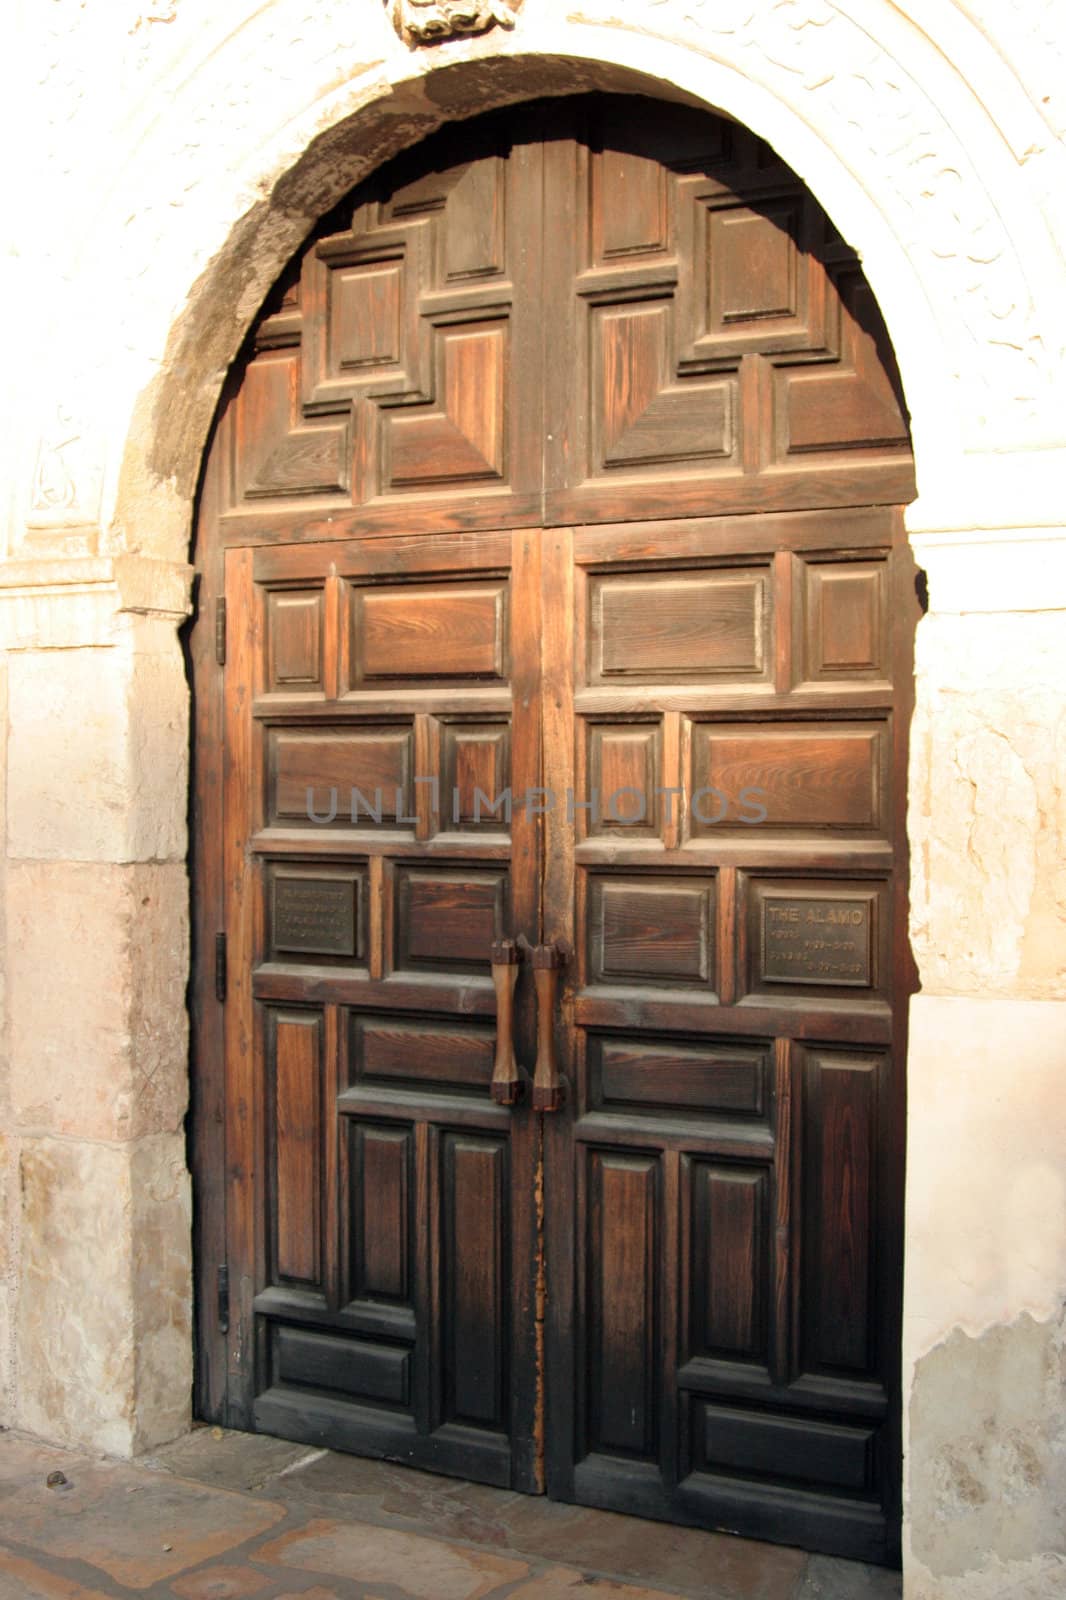 An old worn wooden door showing the grain of the wood